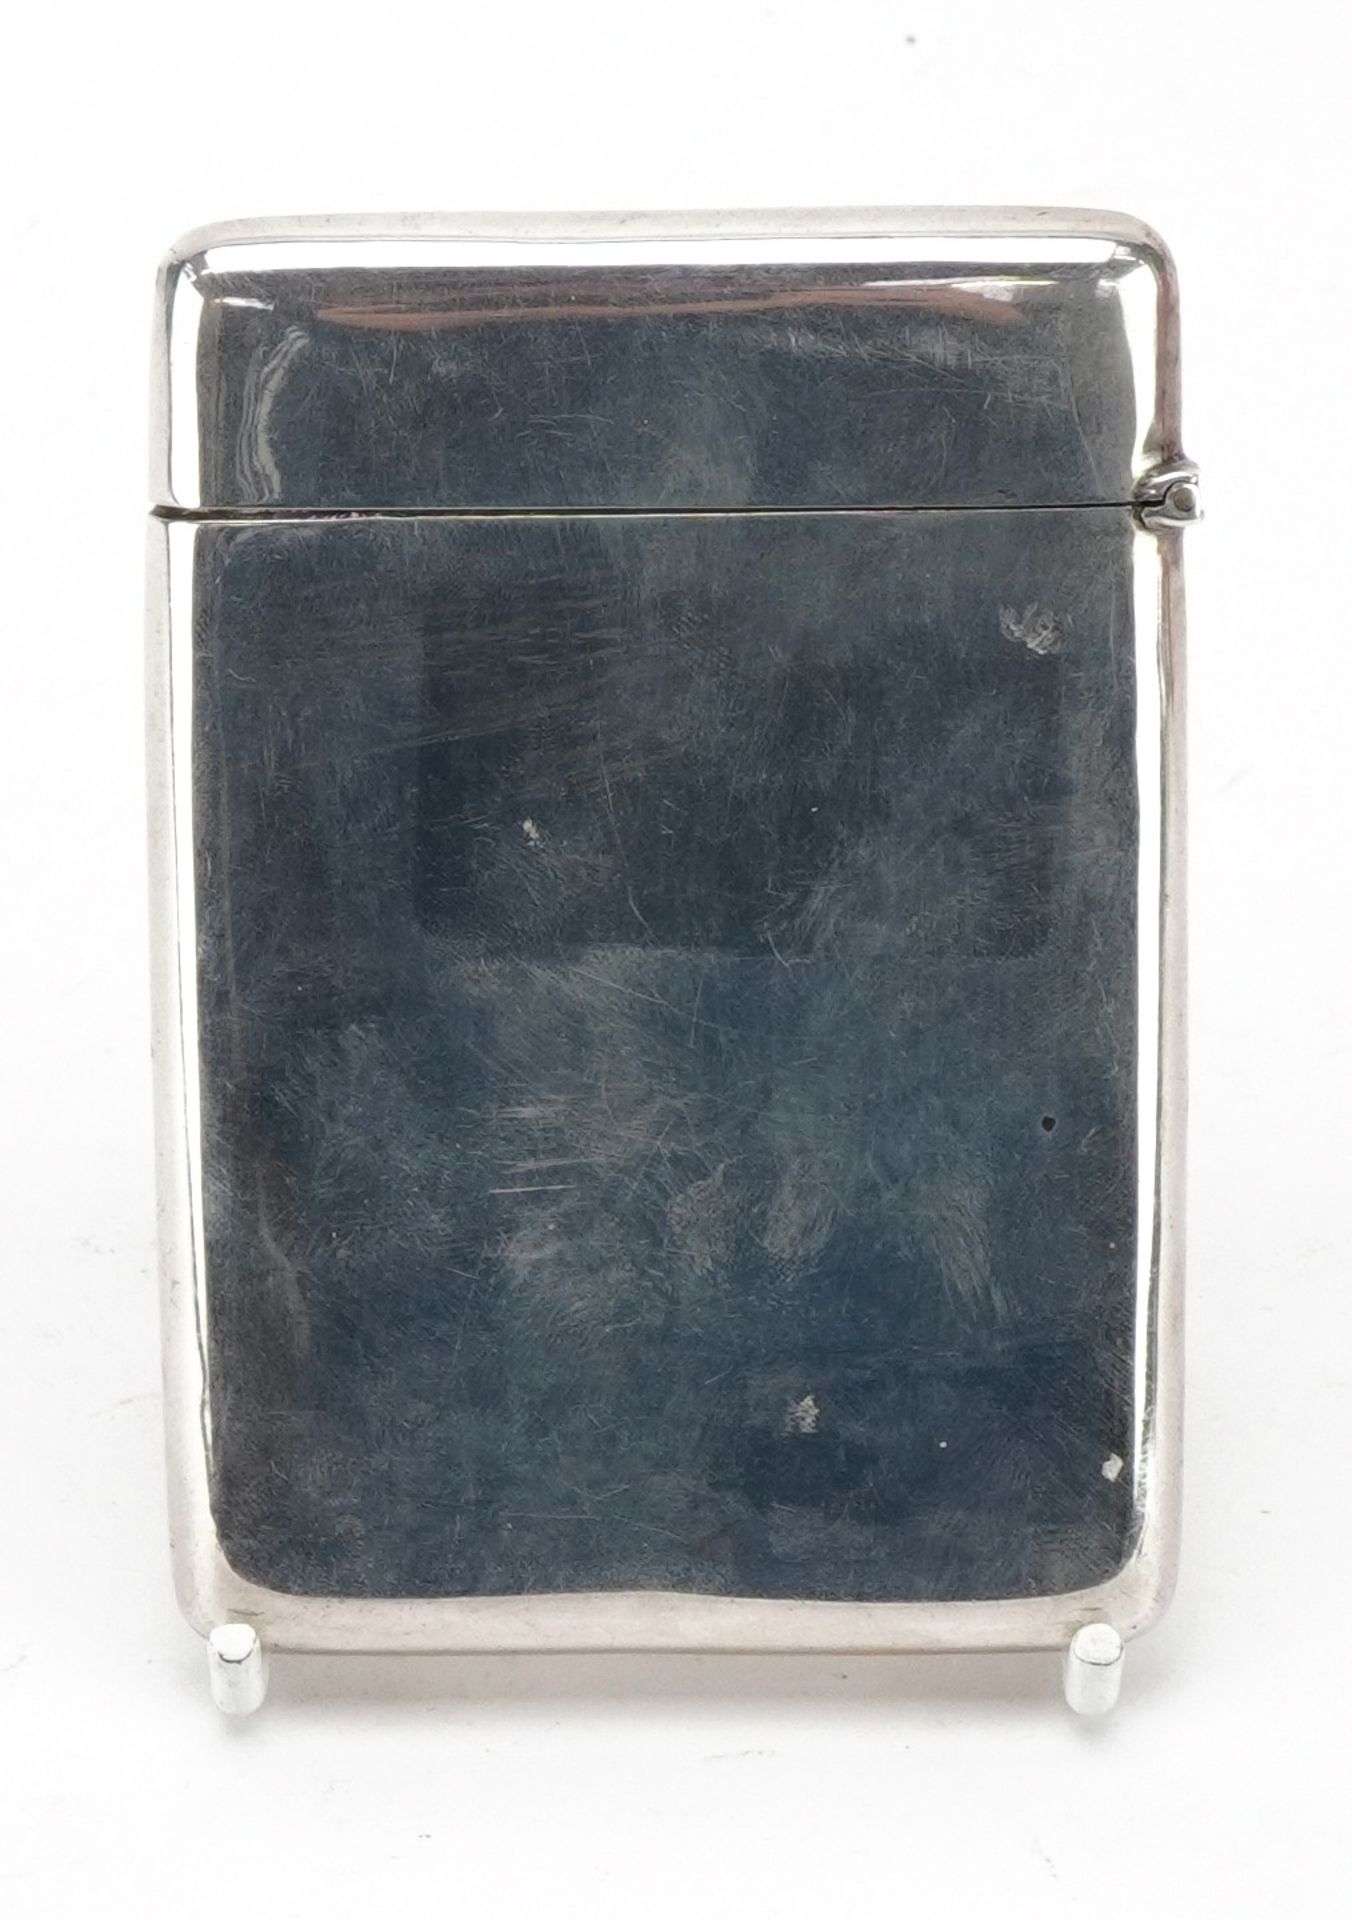 Walker & Hall, Edwardian shipping interest silver souvenir card case enamelled with Elder Dempster - Image 3 of 3